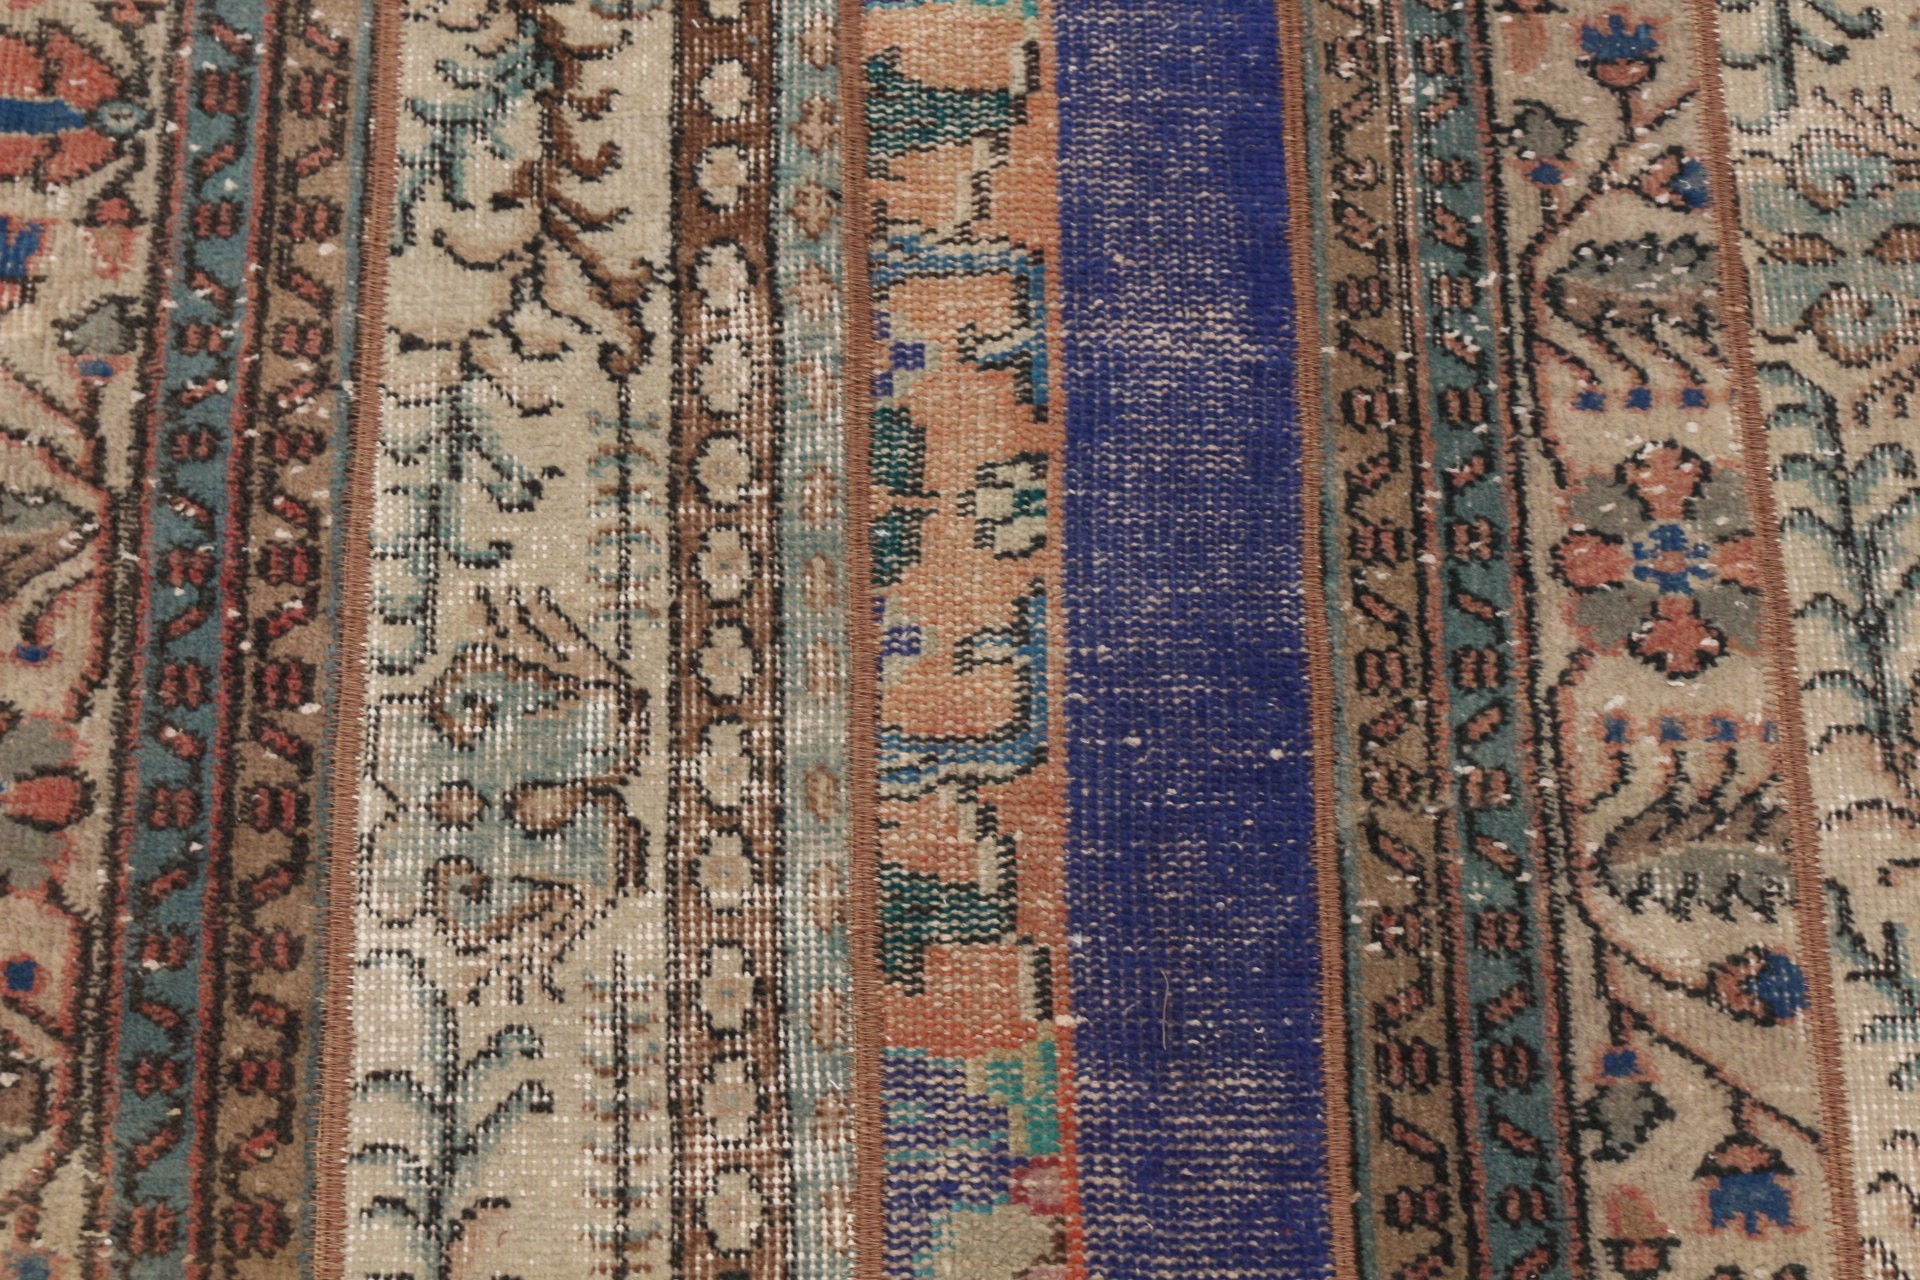 Floor Rug, Entry Rug, Turkish Rug, Oriental Rugs, Rugs for Car Mat, Kitchen Rugs, Vintage Rug, Brown  2.9x3.4 ft Small Rug